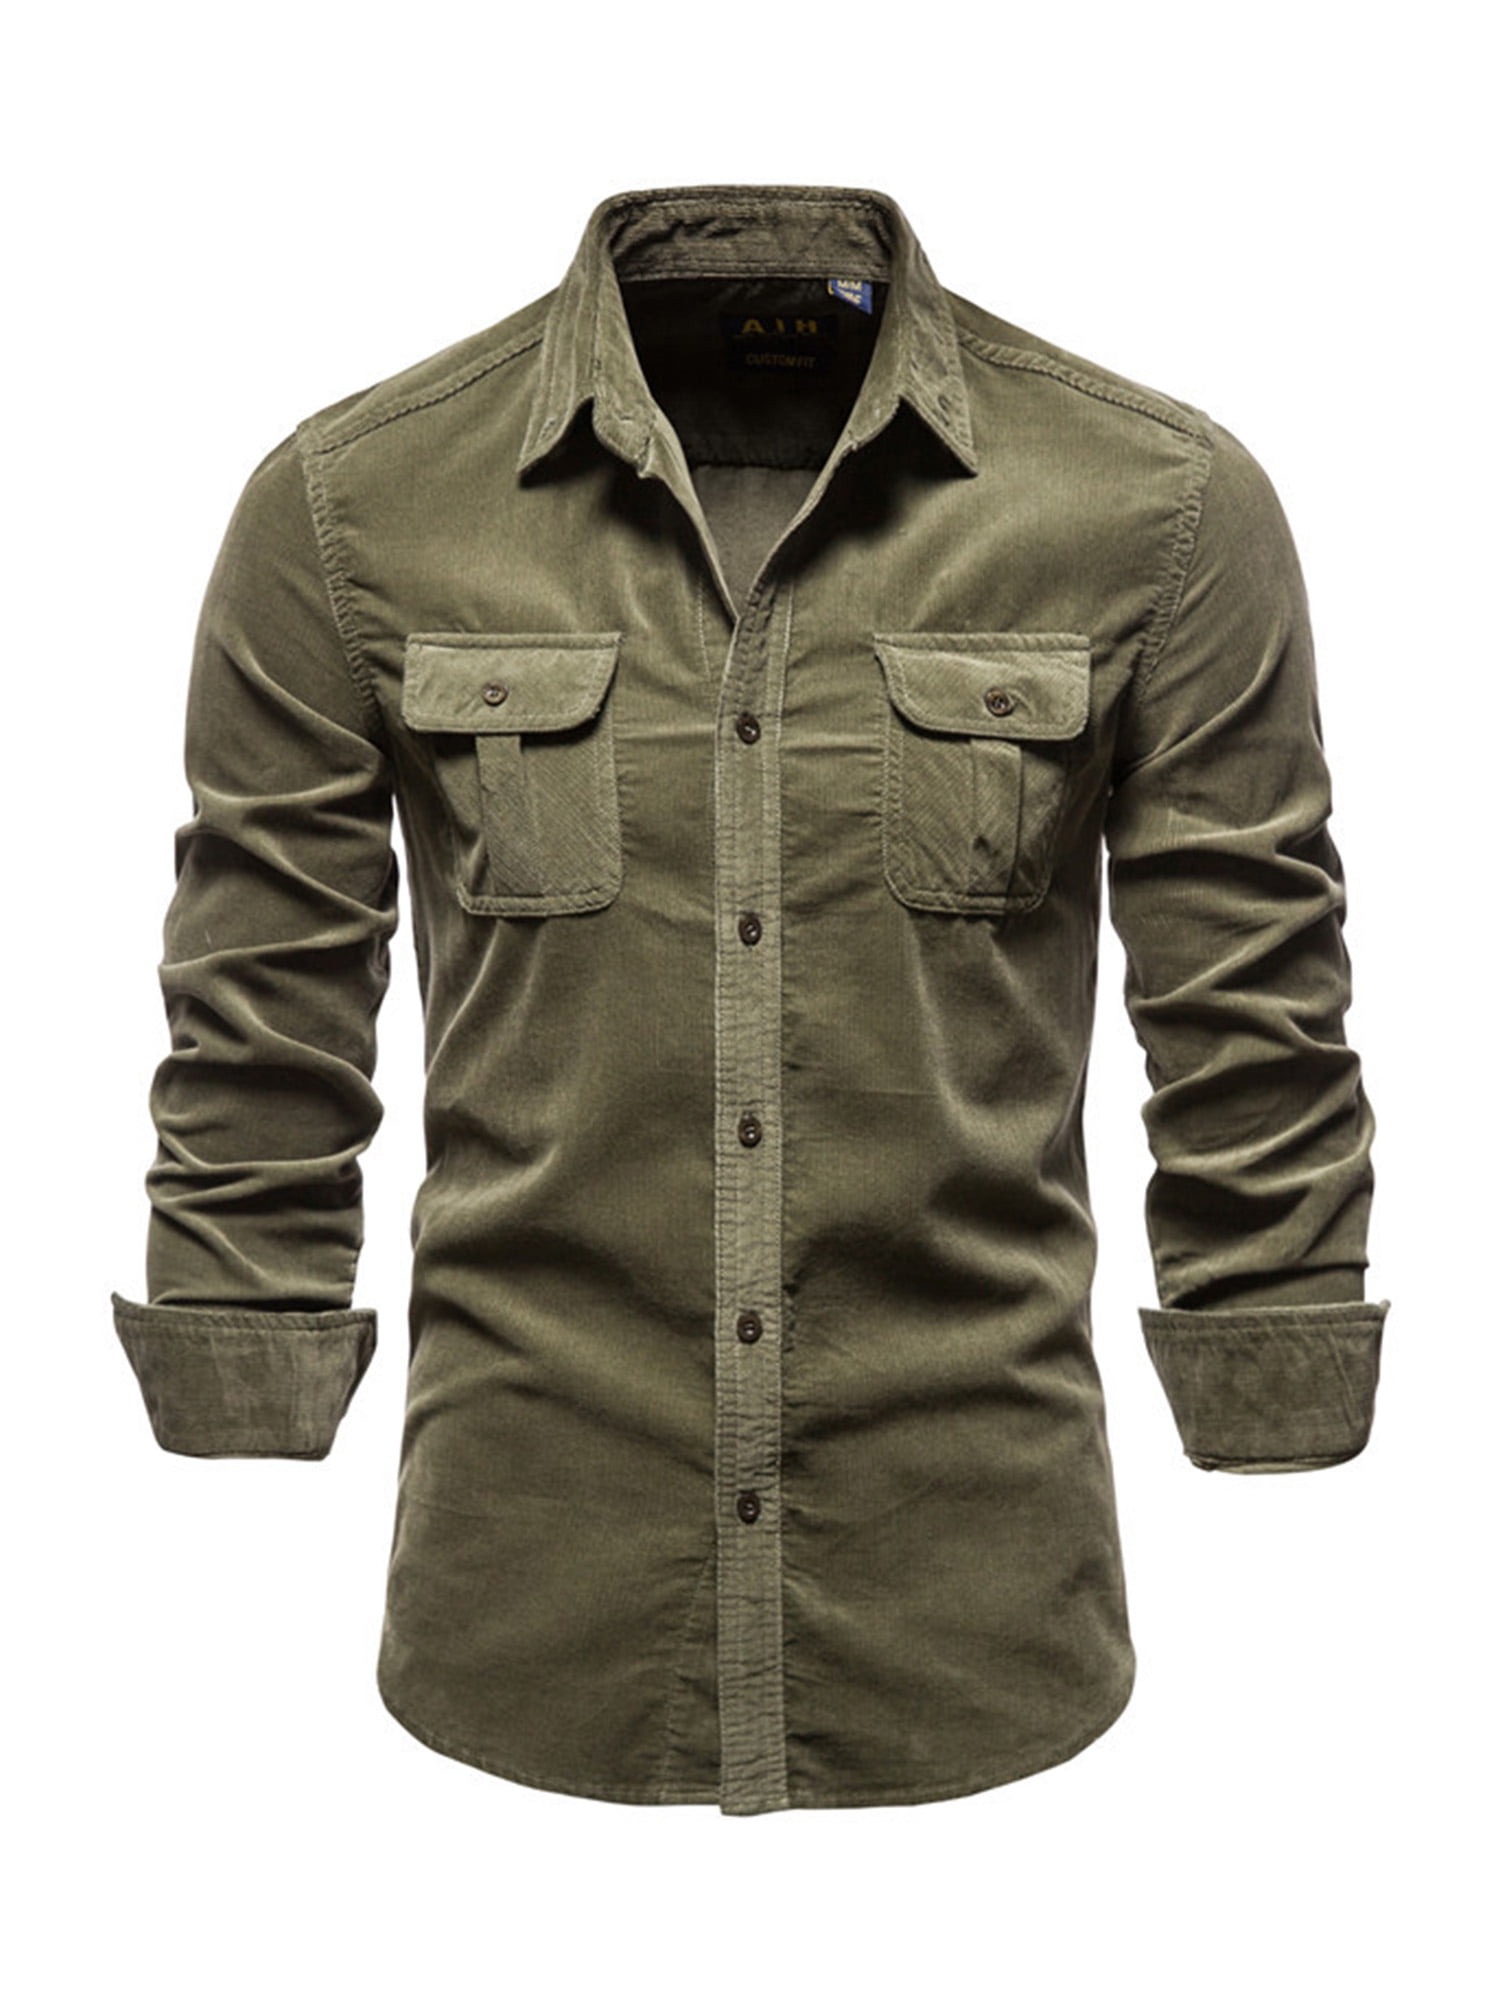 COOFANDY Men's Corduroy Shirt Casual Long Sleeve Button Down Lightweight Shirt 